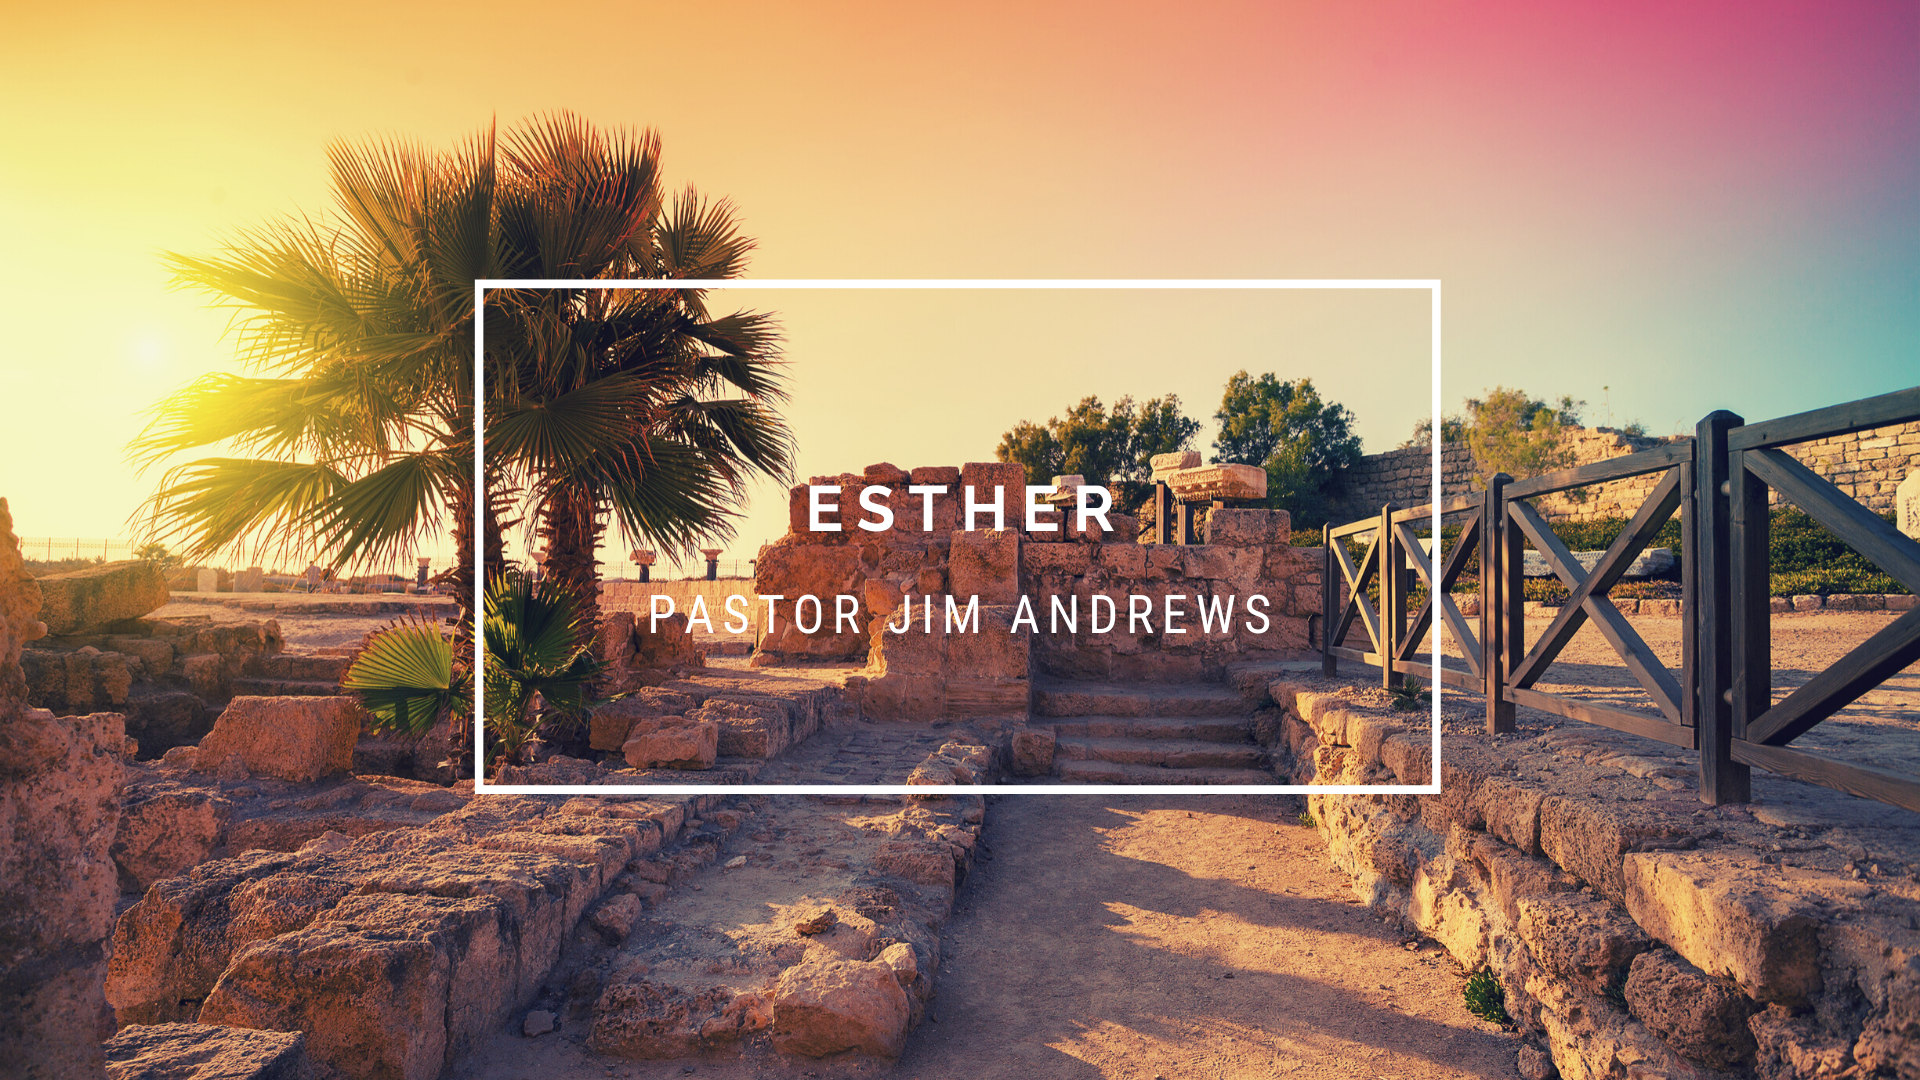 Esther 1:1-22